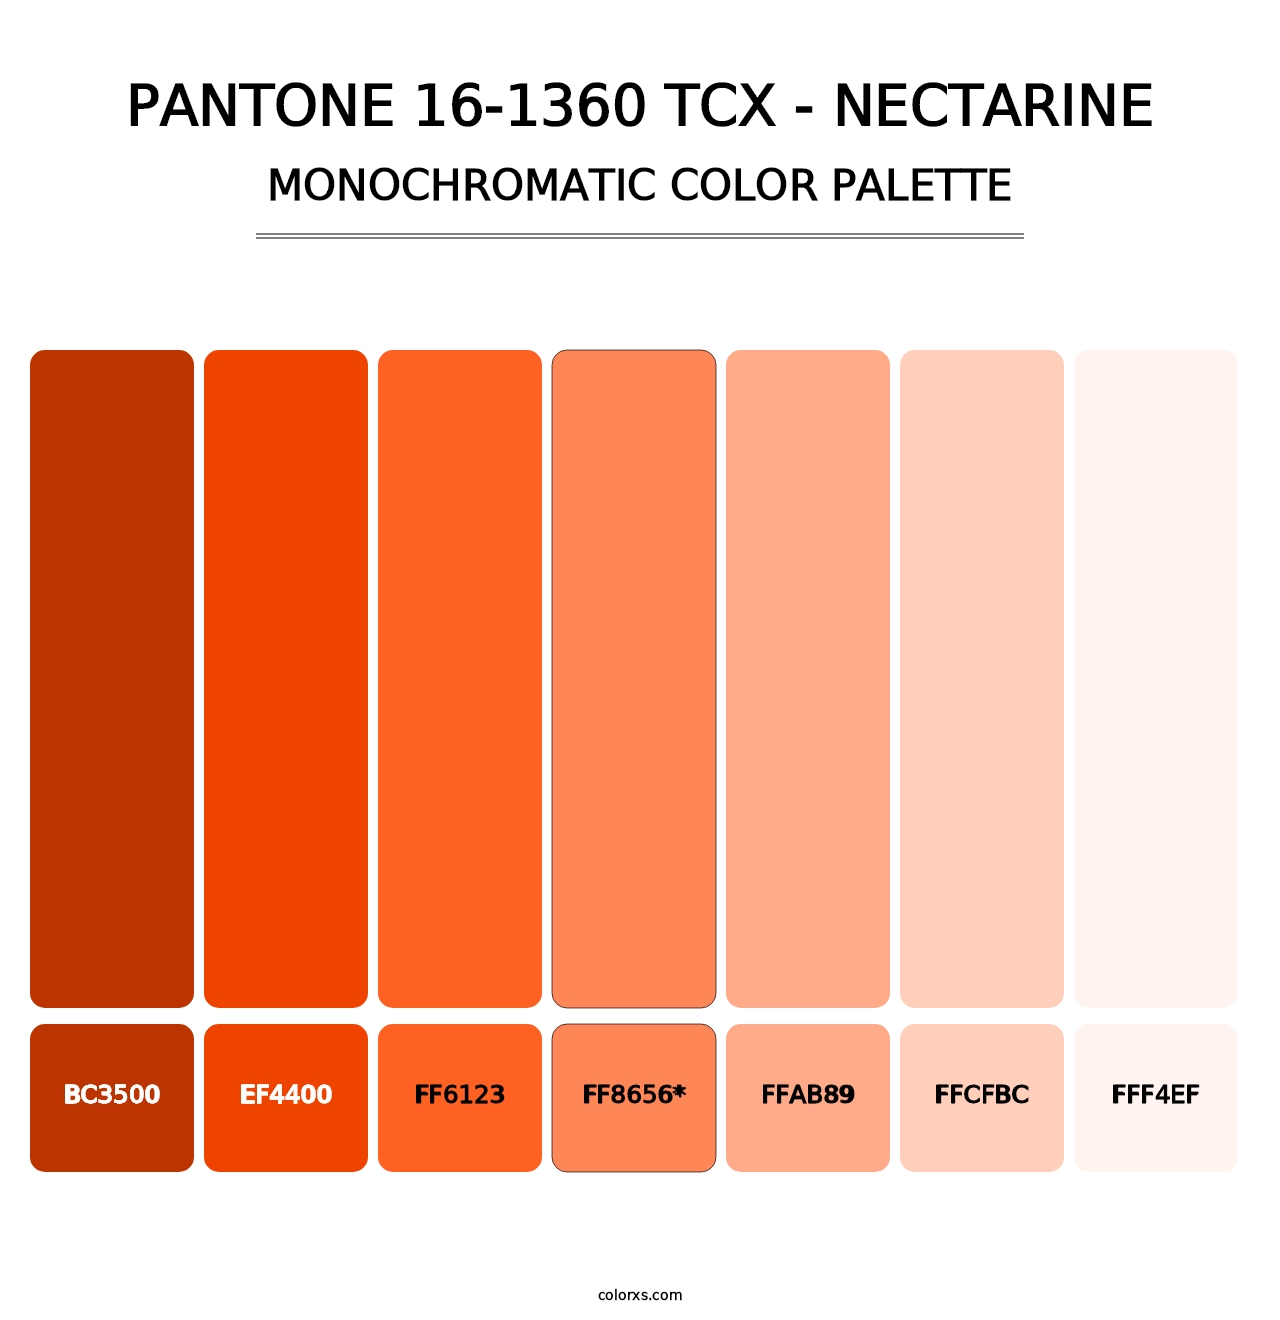 PANTONE 16-1360 TCX - Nectarine - Monochromatic Color Palette